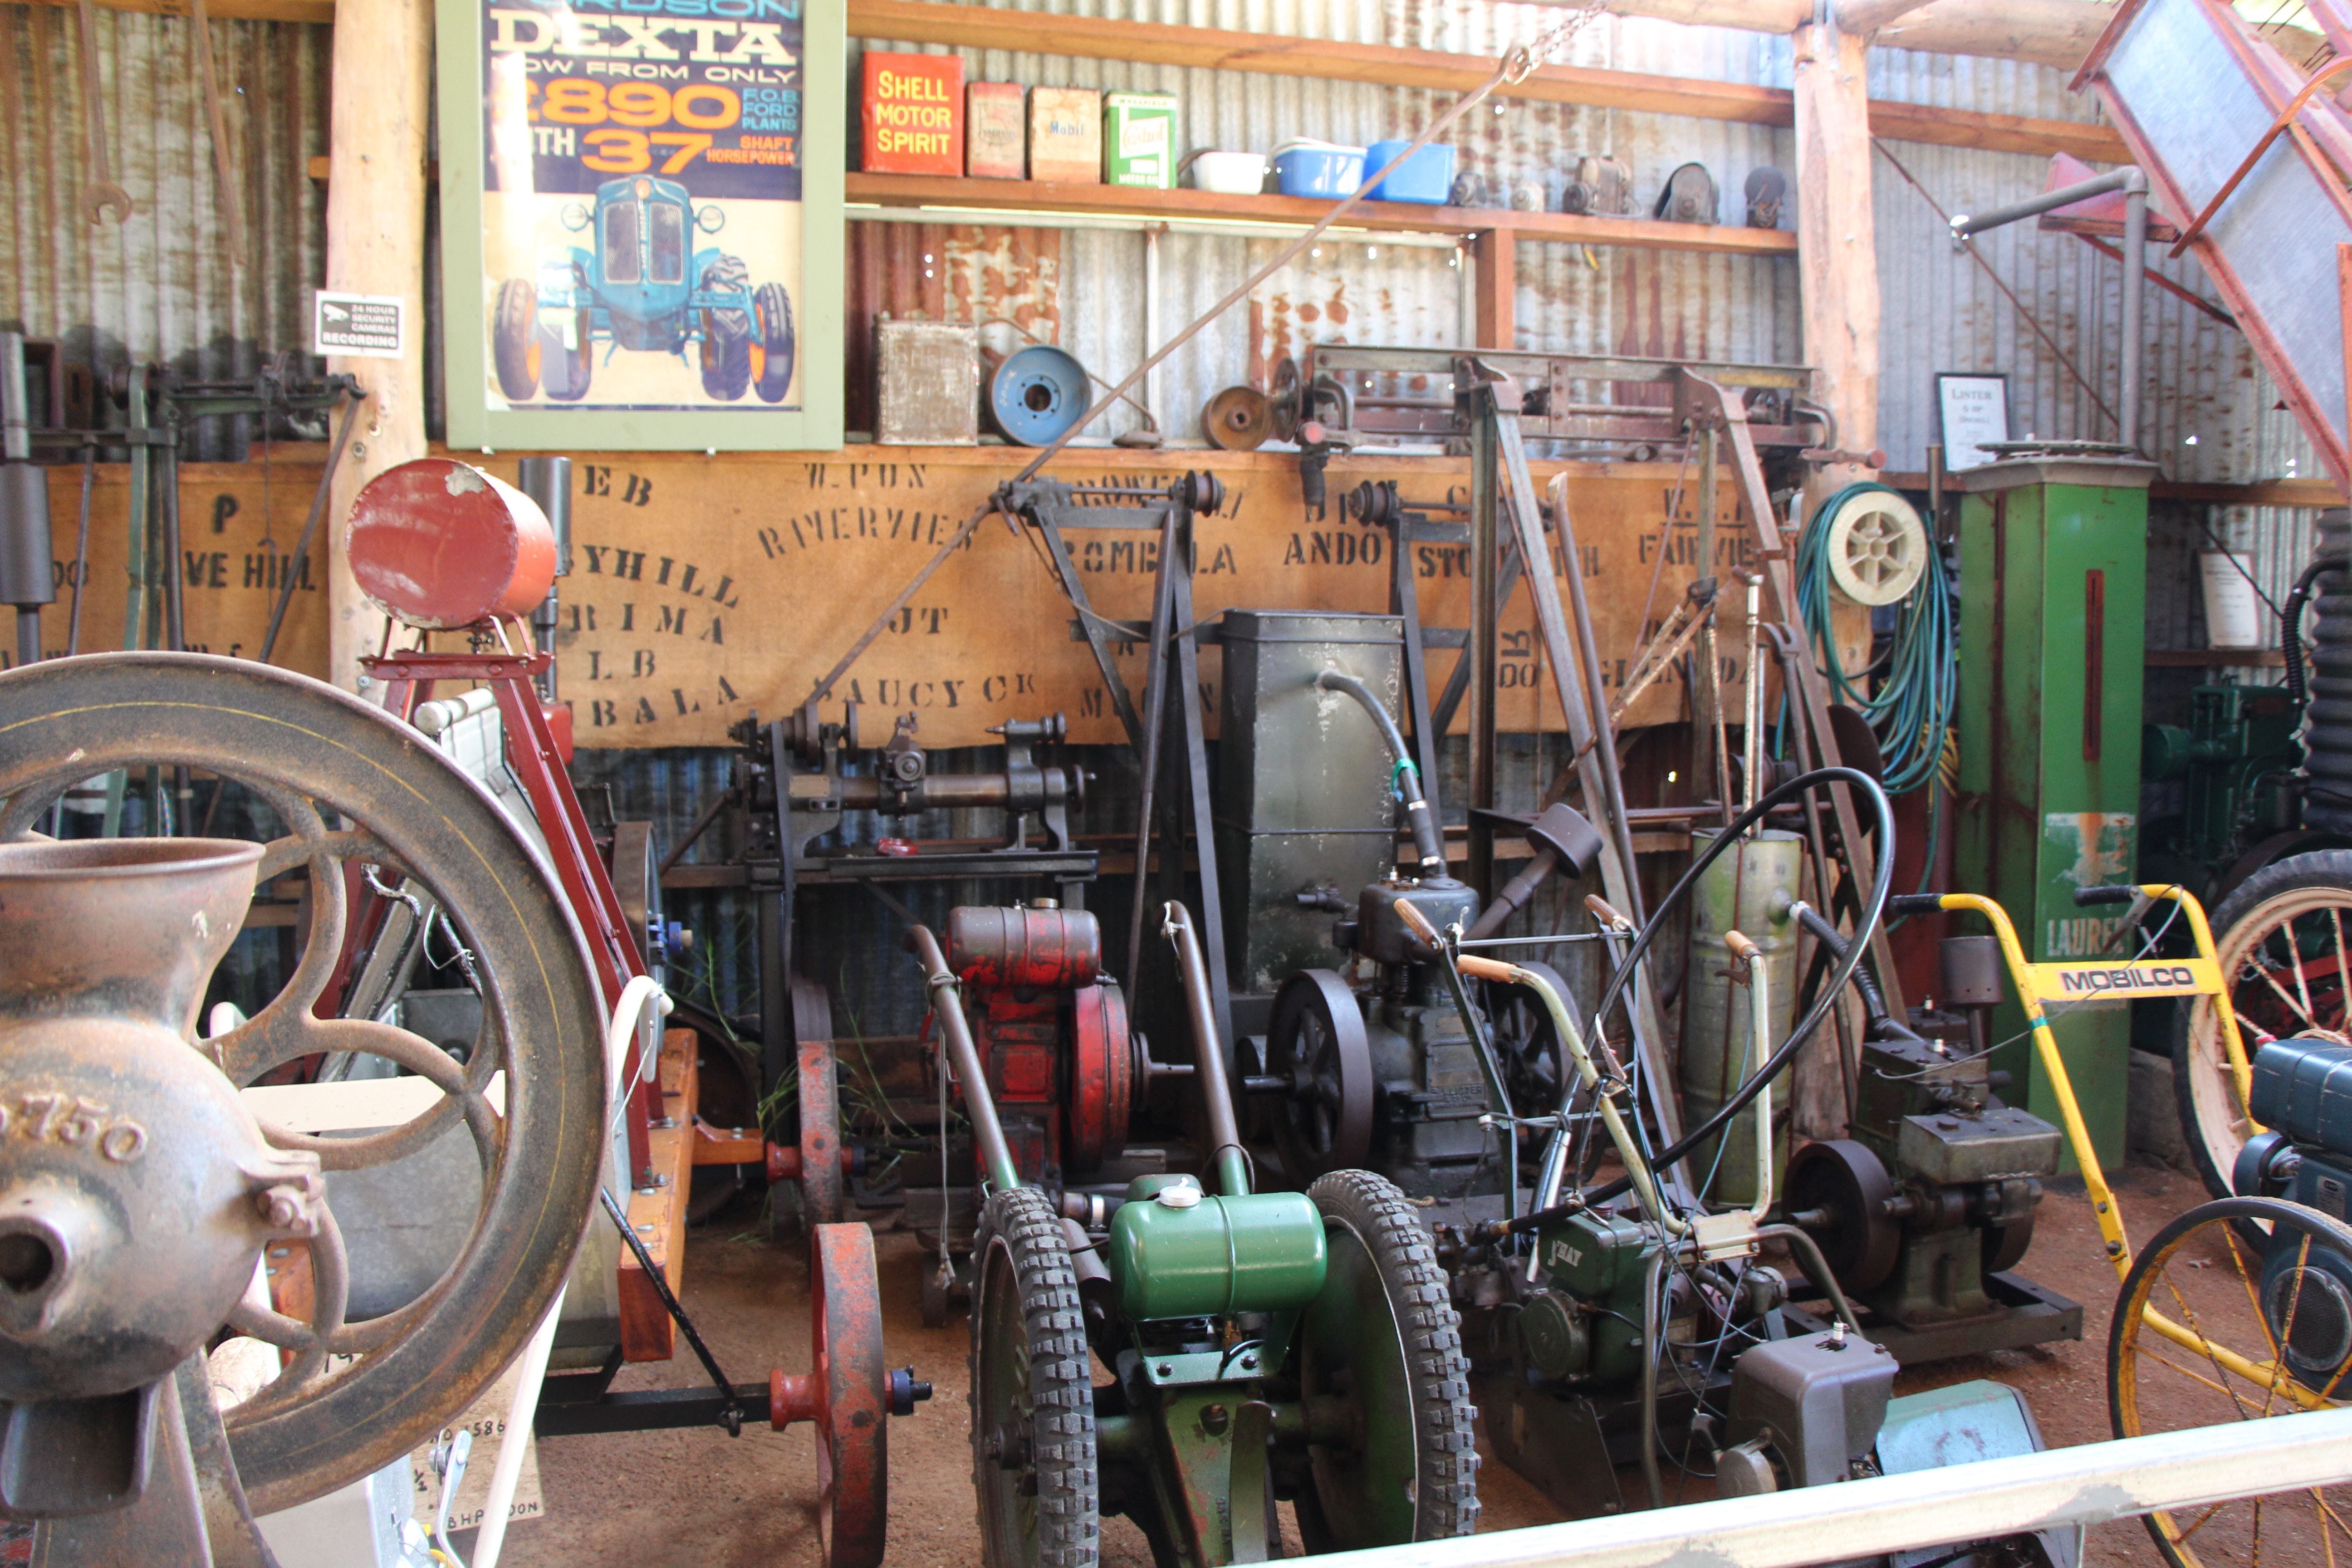 Bombala Historic Engine and Machinery Shed - Wagga Wagga Accommodation